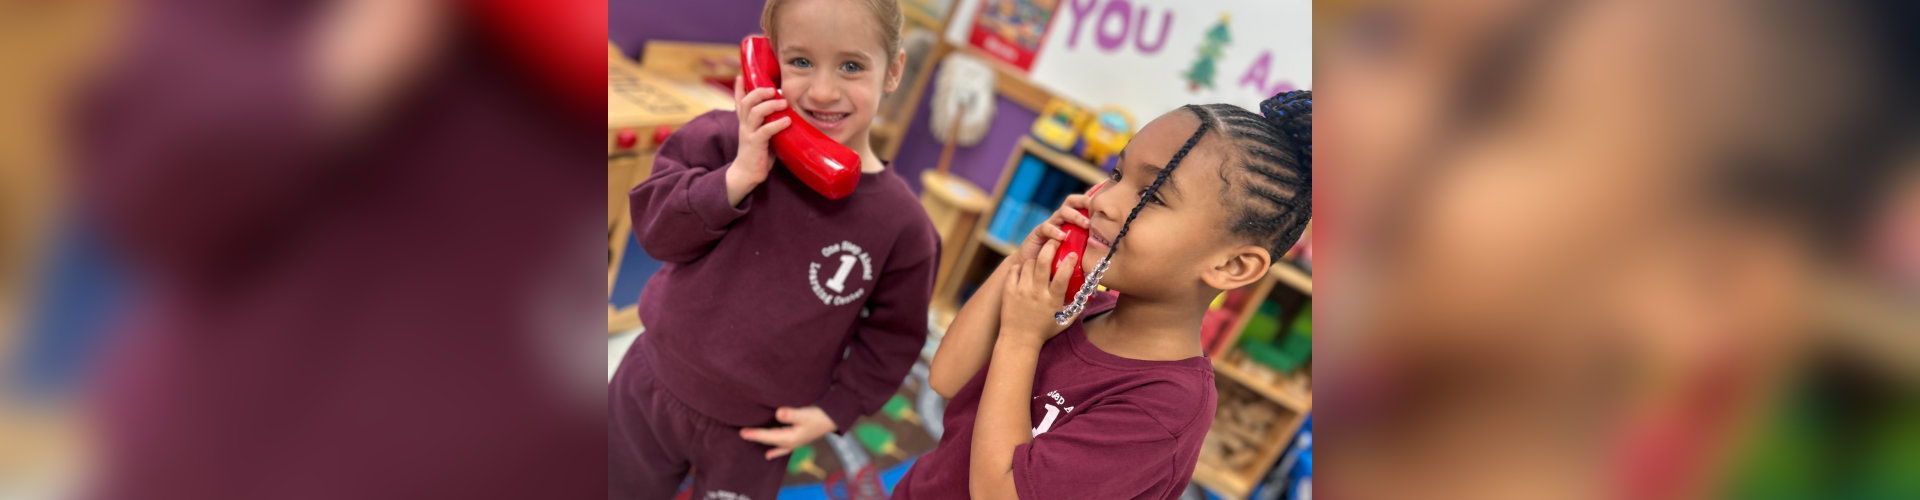 children answering phone calls